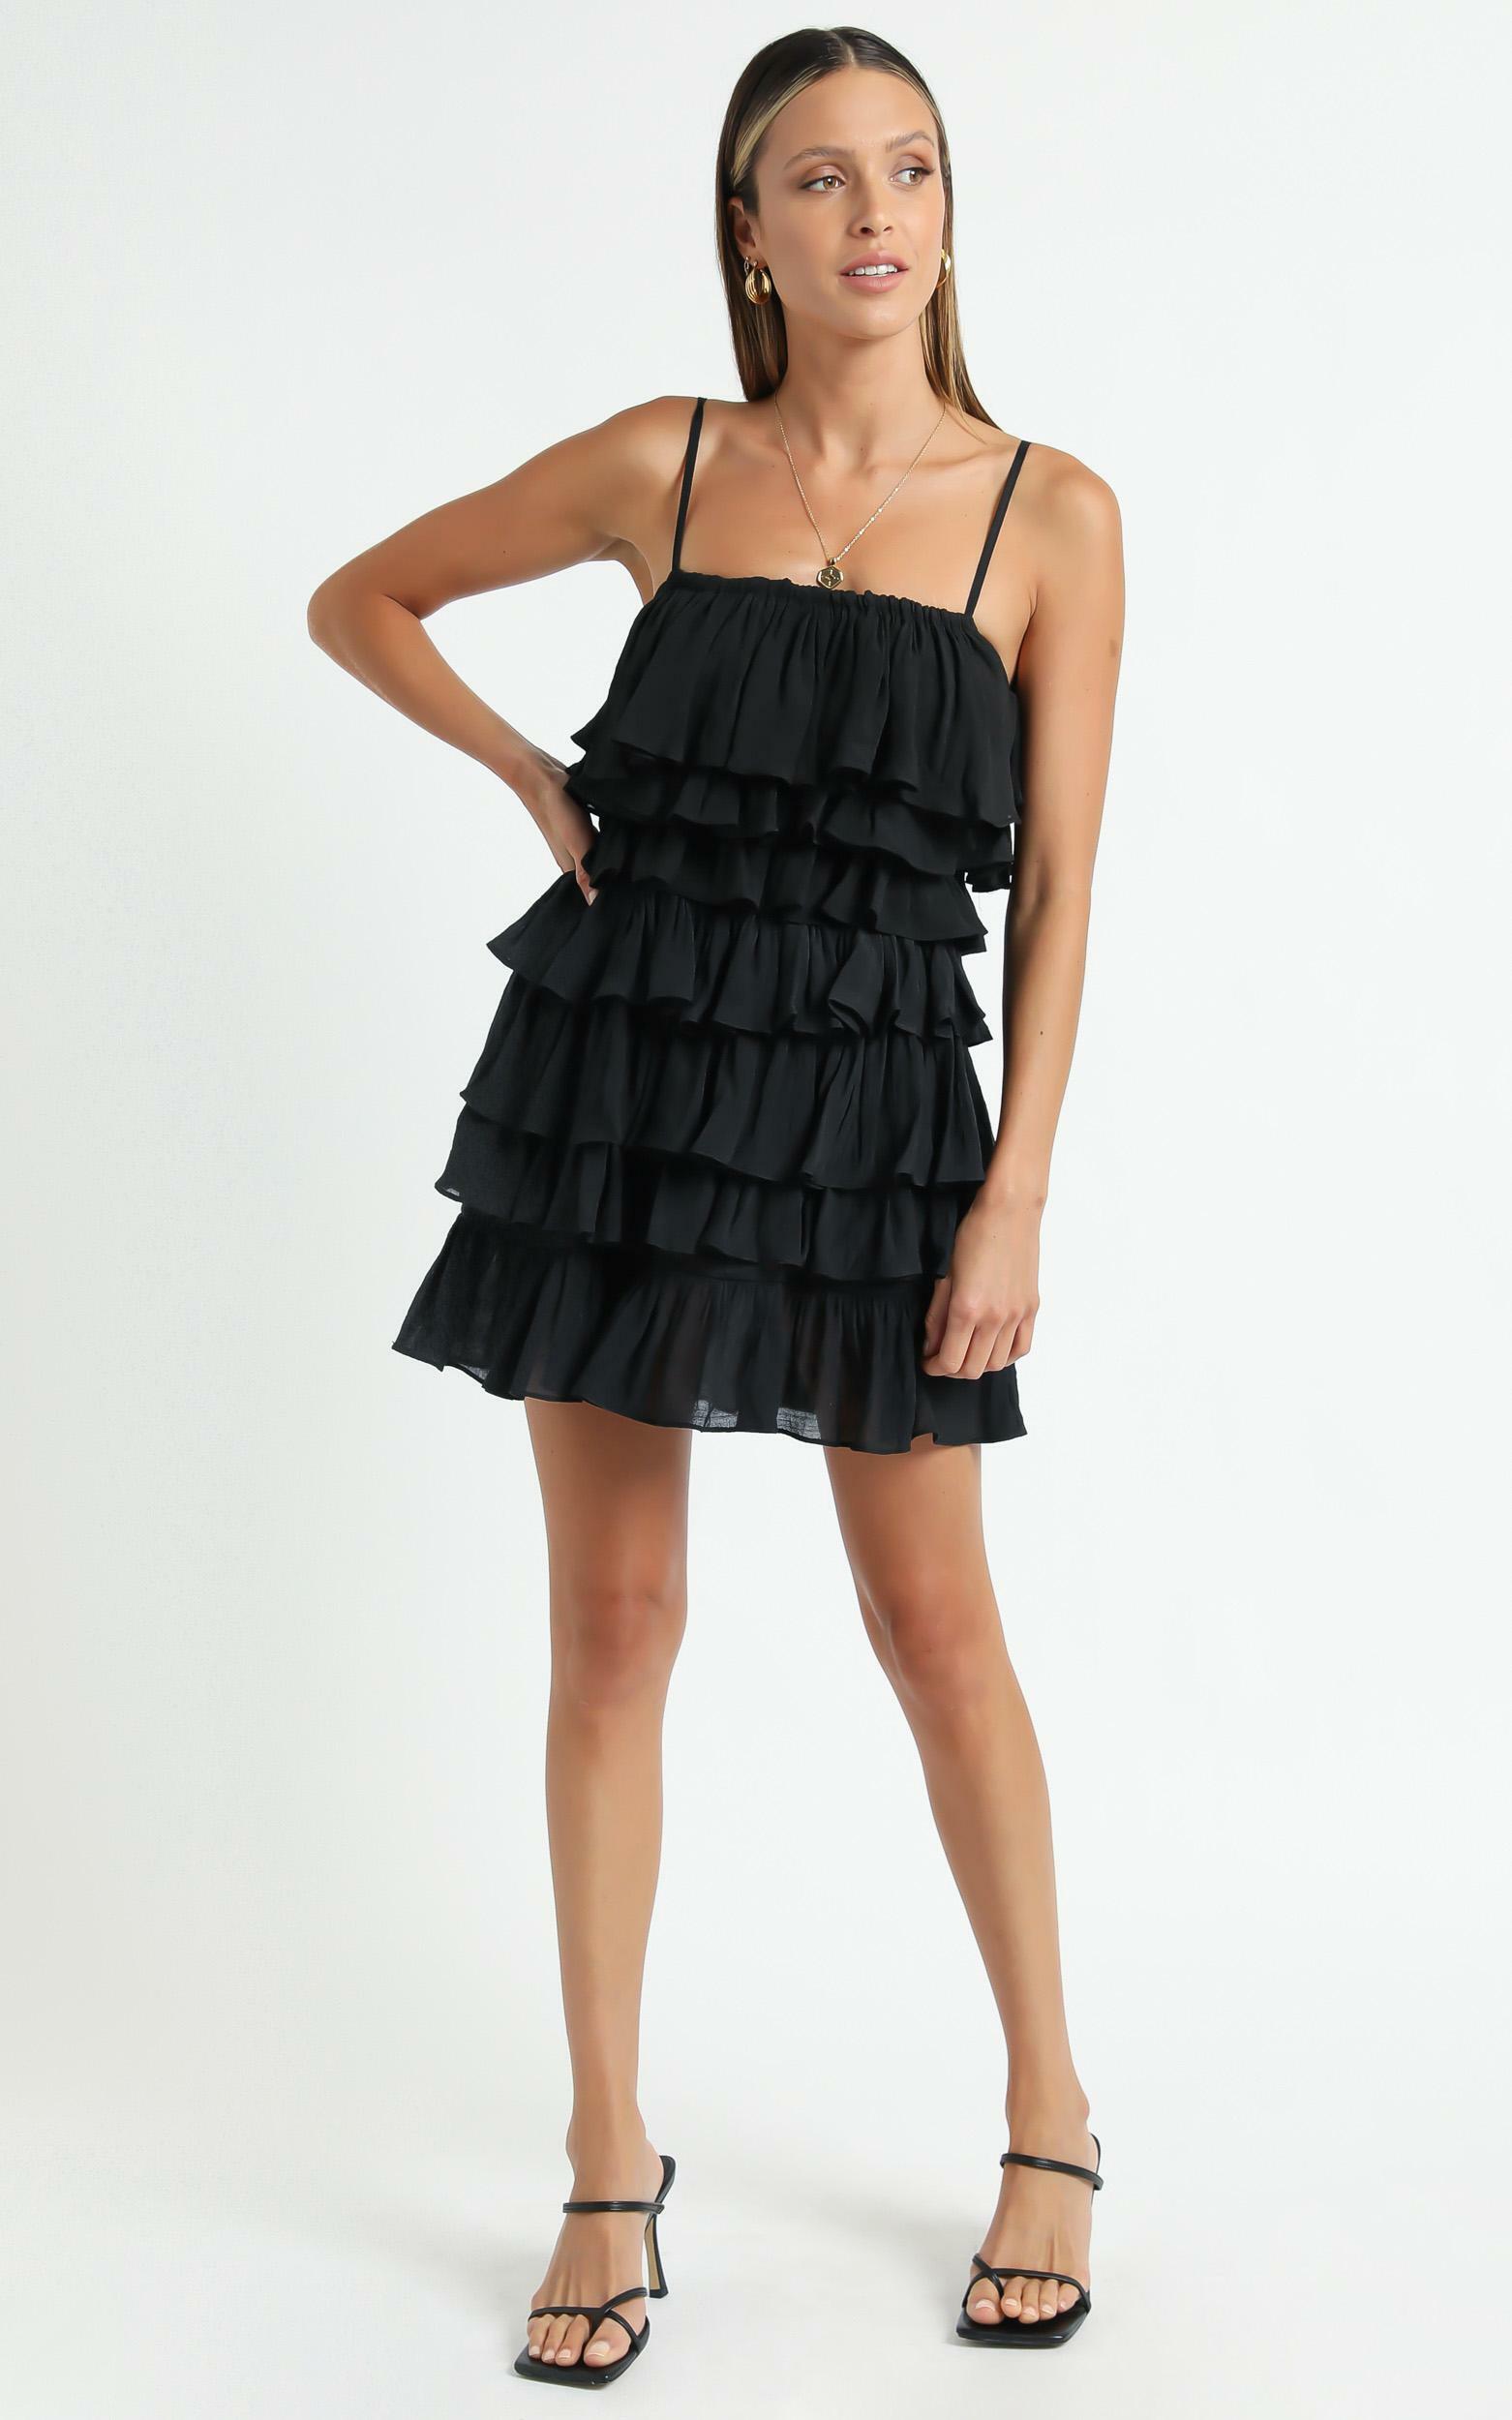 Minkpink - Merindah Layered Mini Skirt in Black - XS, Black, hi-res image number null